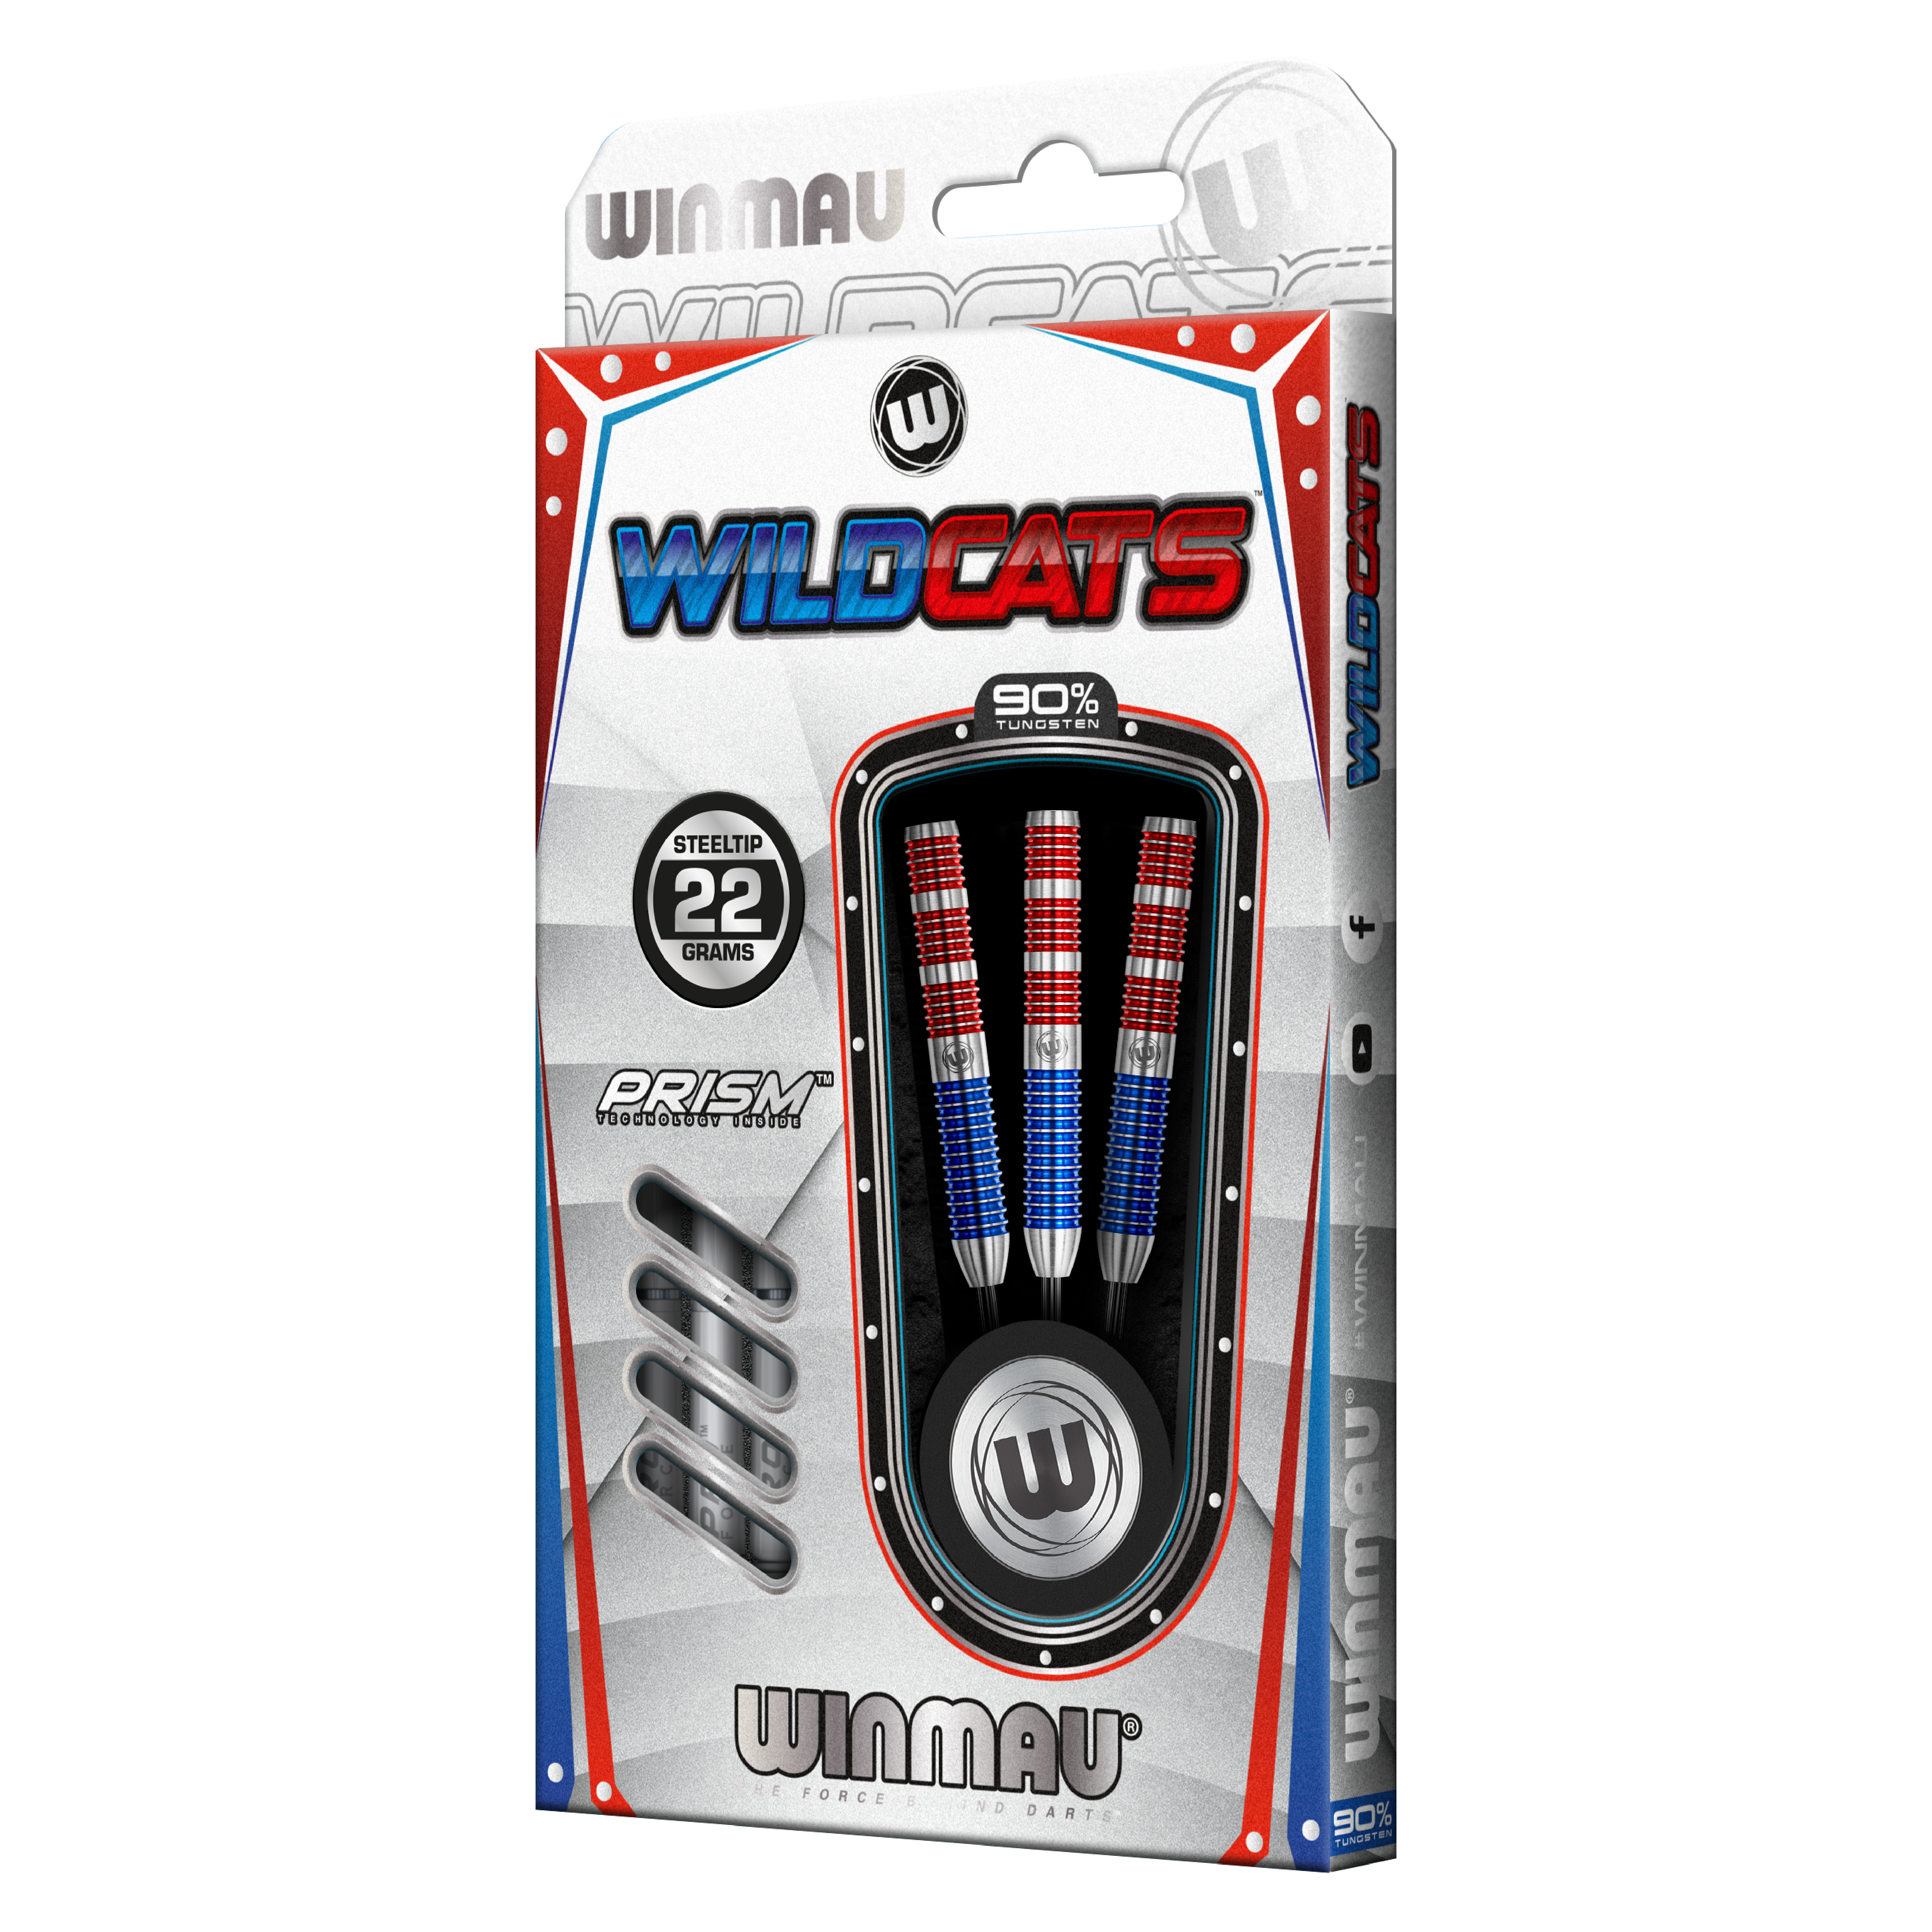 Winmau Wildcats steeltip darts 22 gram